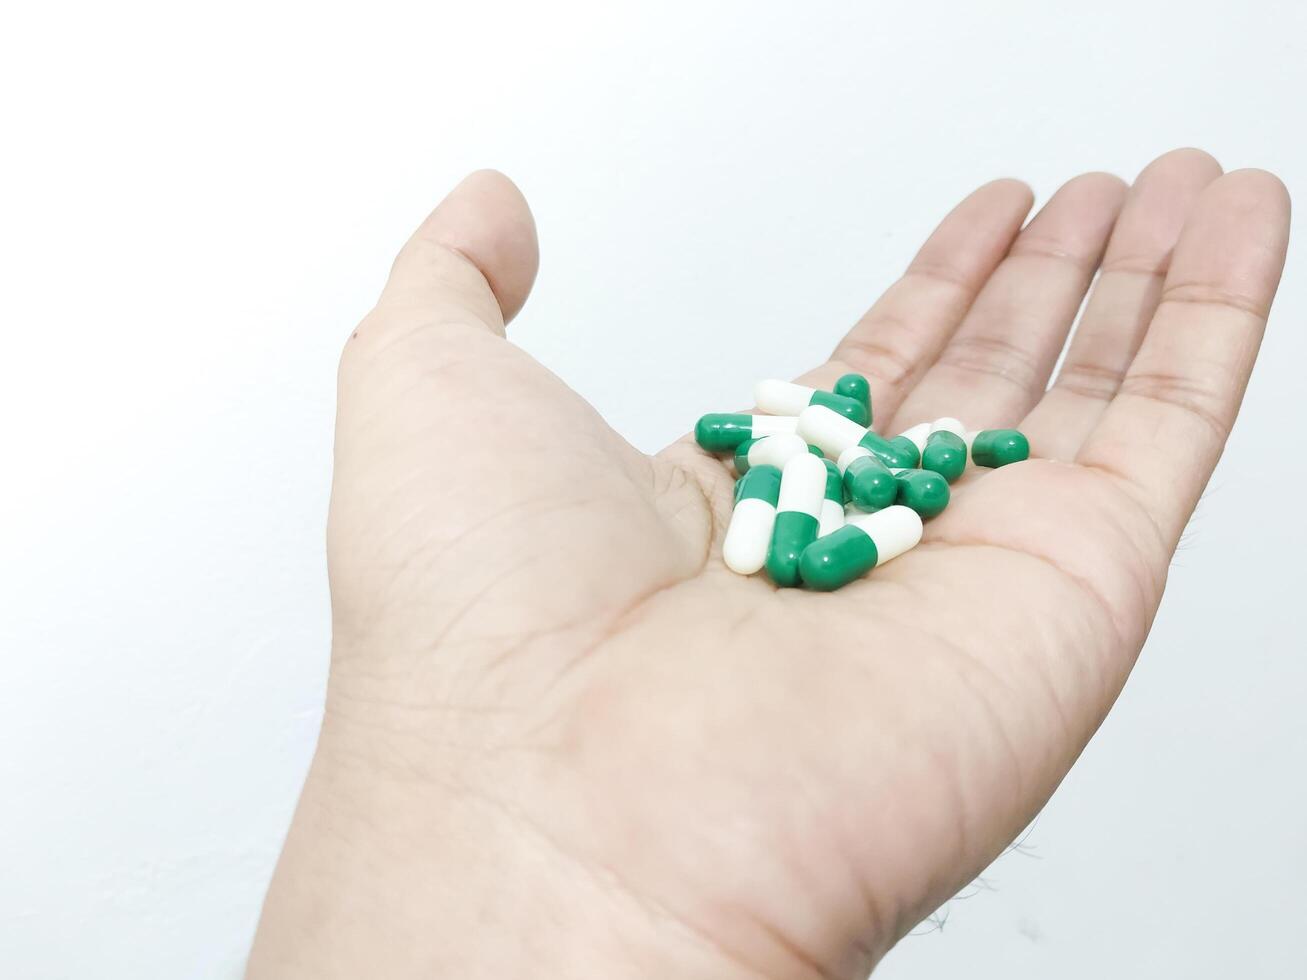 kapsel piller placerad i de handflatan av de hand isolerat på en vit bakgrund foto